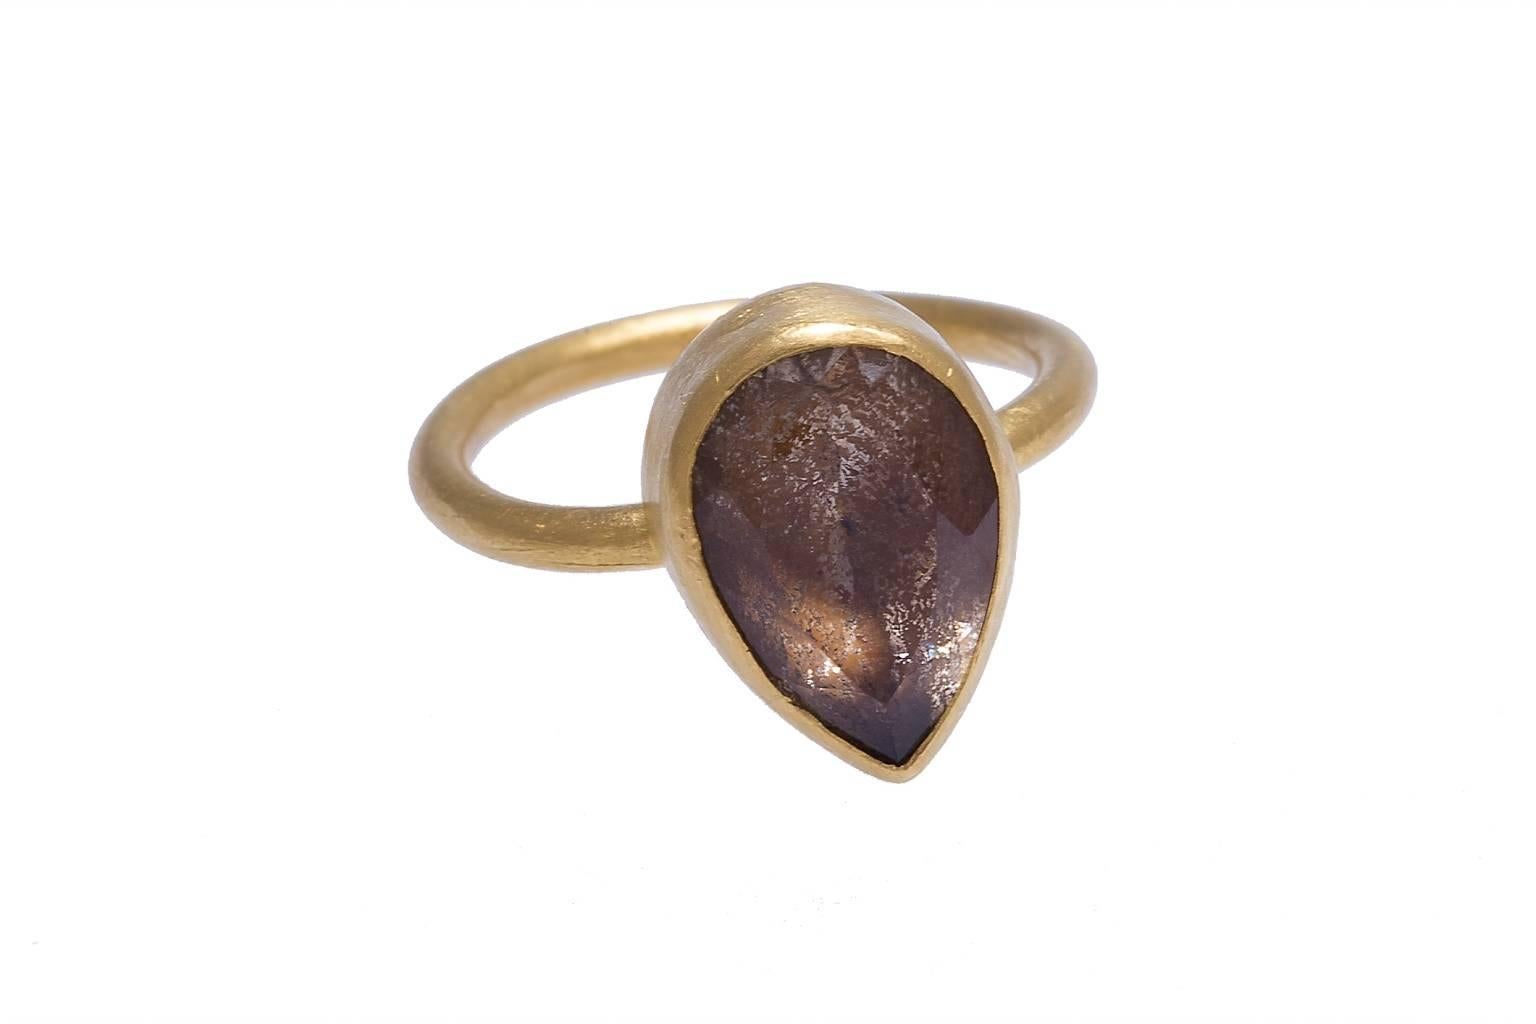 24K Yossi Harari ring containing a bezel set pear shape faceted smoky quartz.

